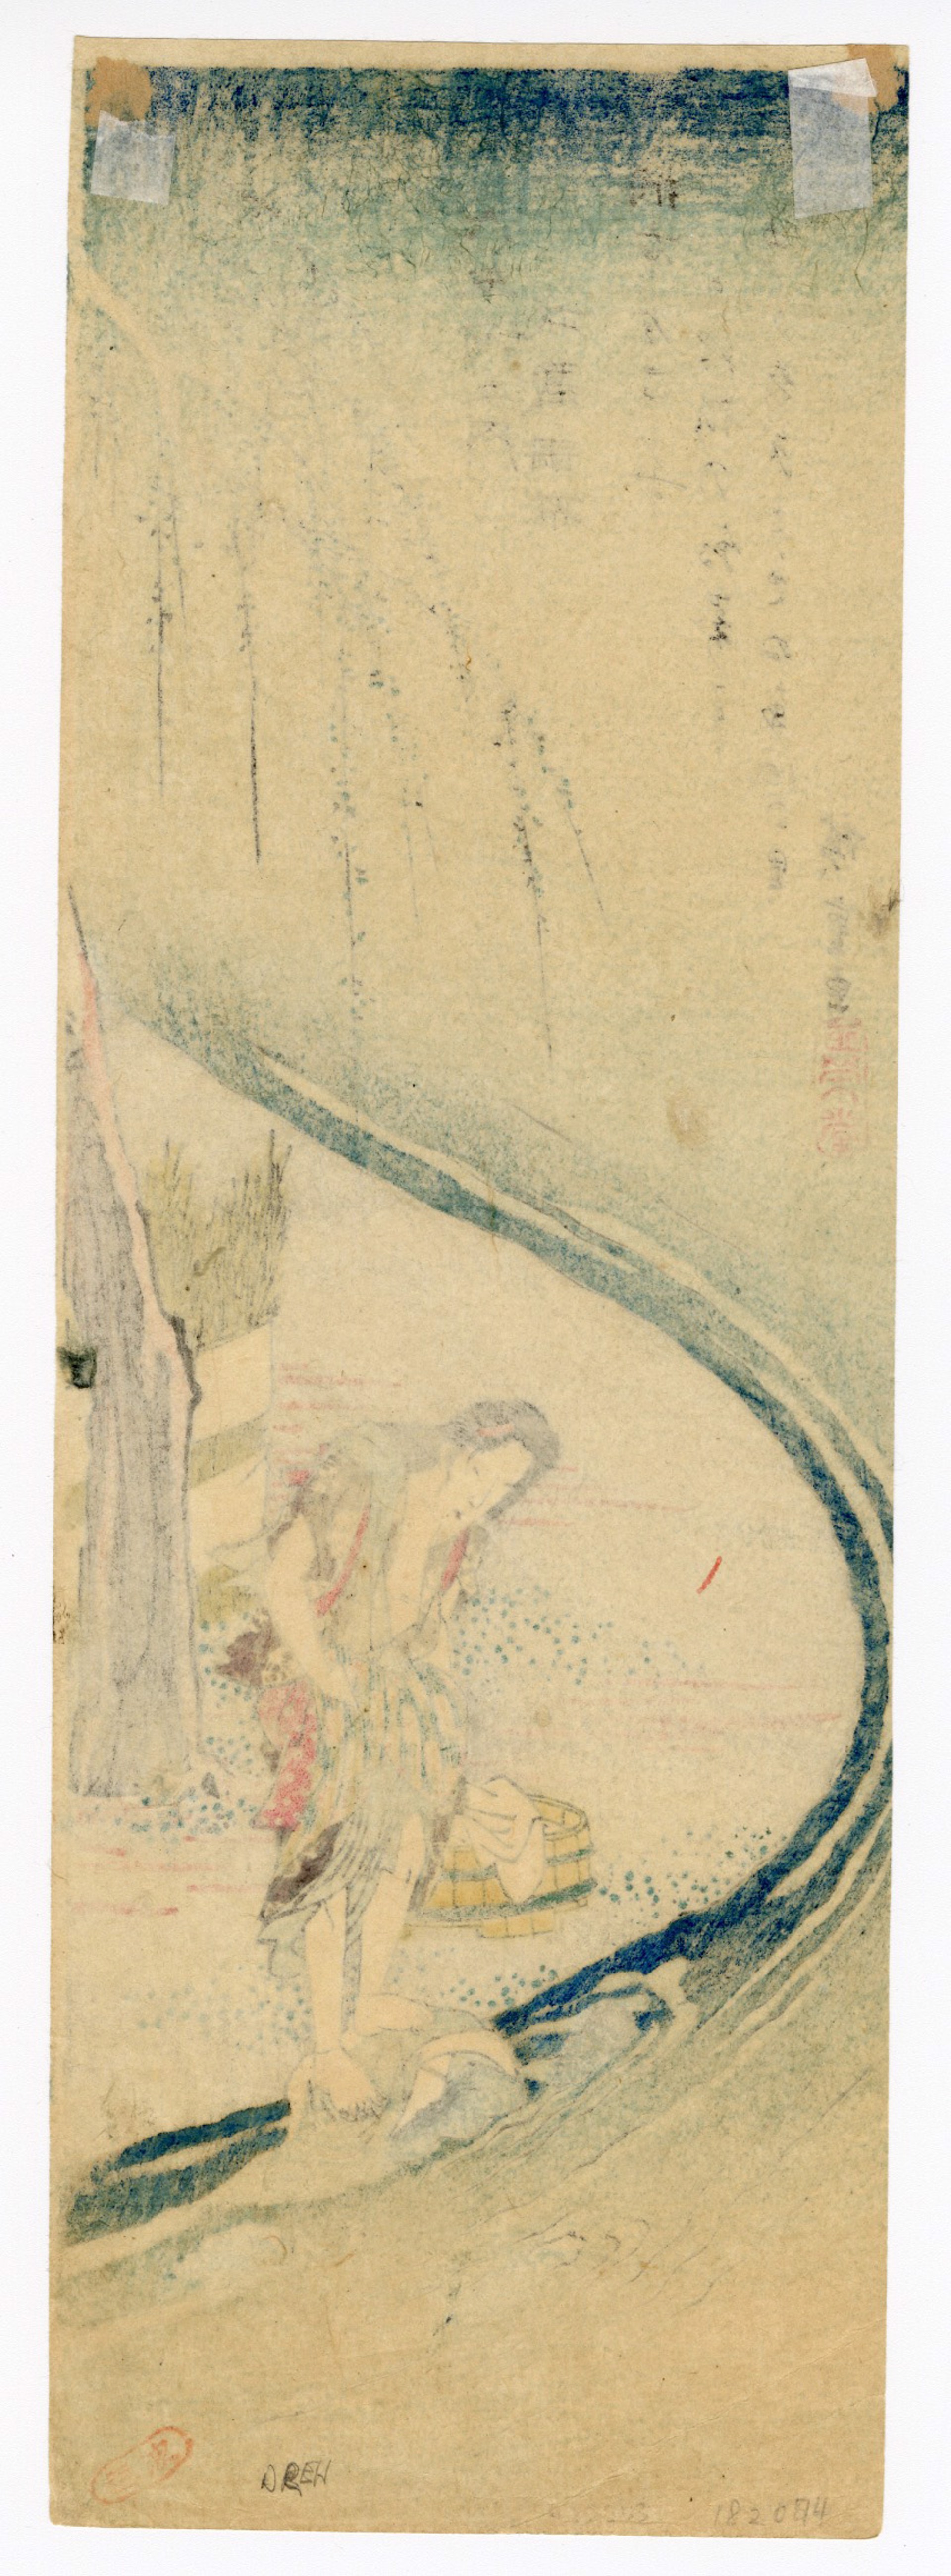 Chofu River in Musashi Province by Hiroshige